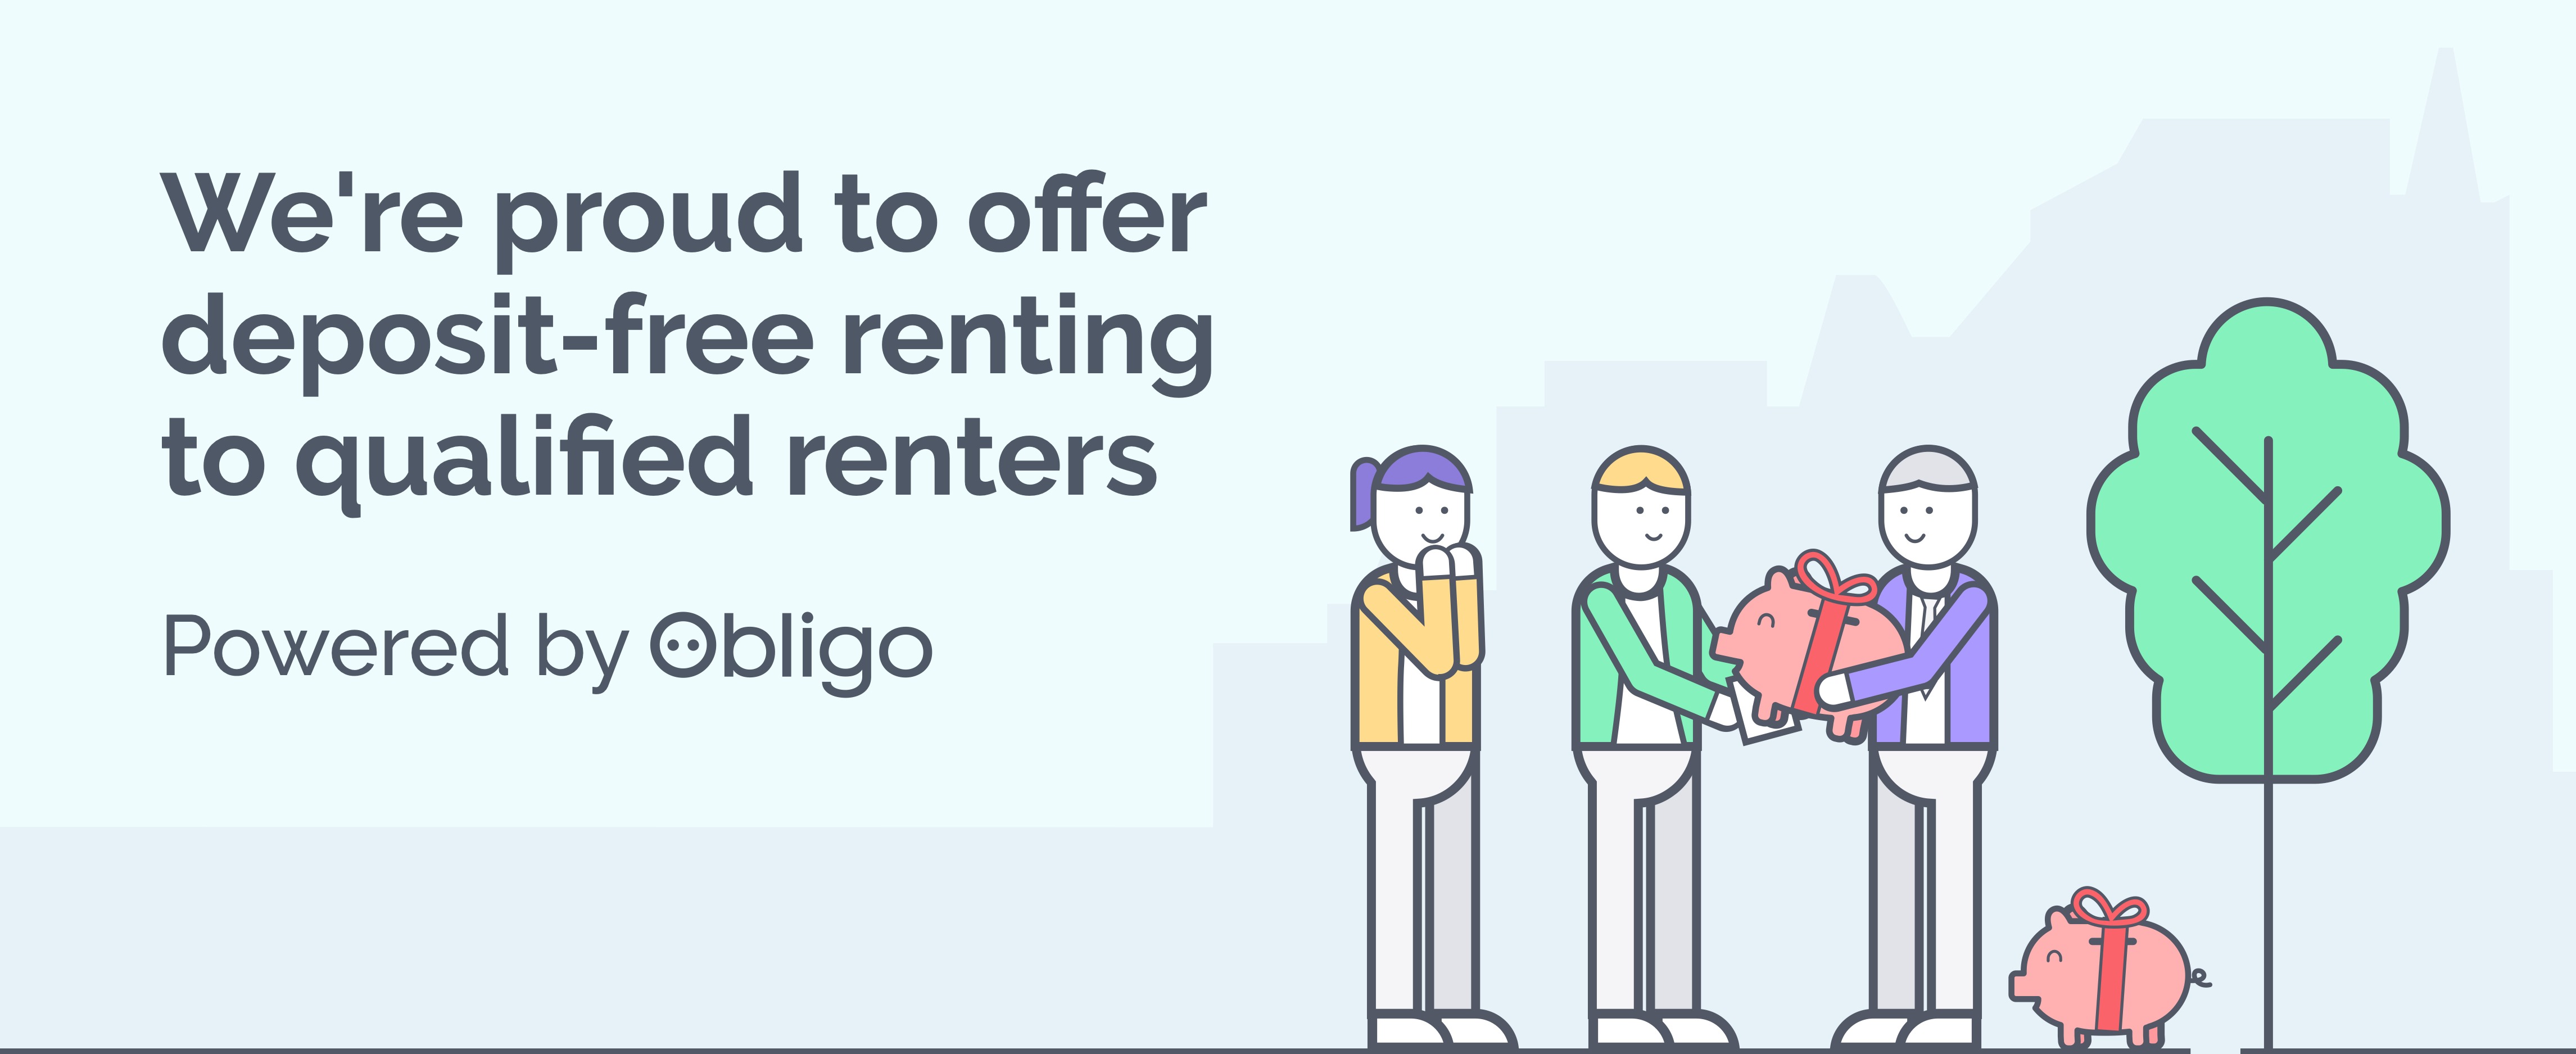 Obligo enabled- Security deposit free living